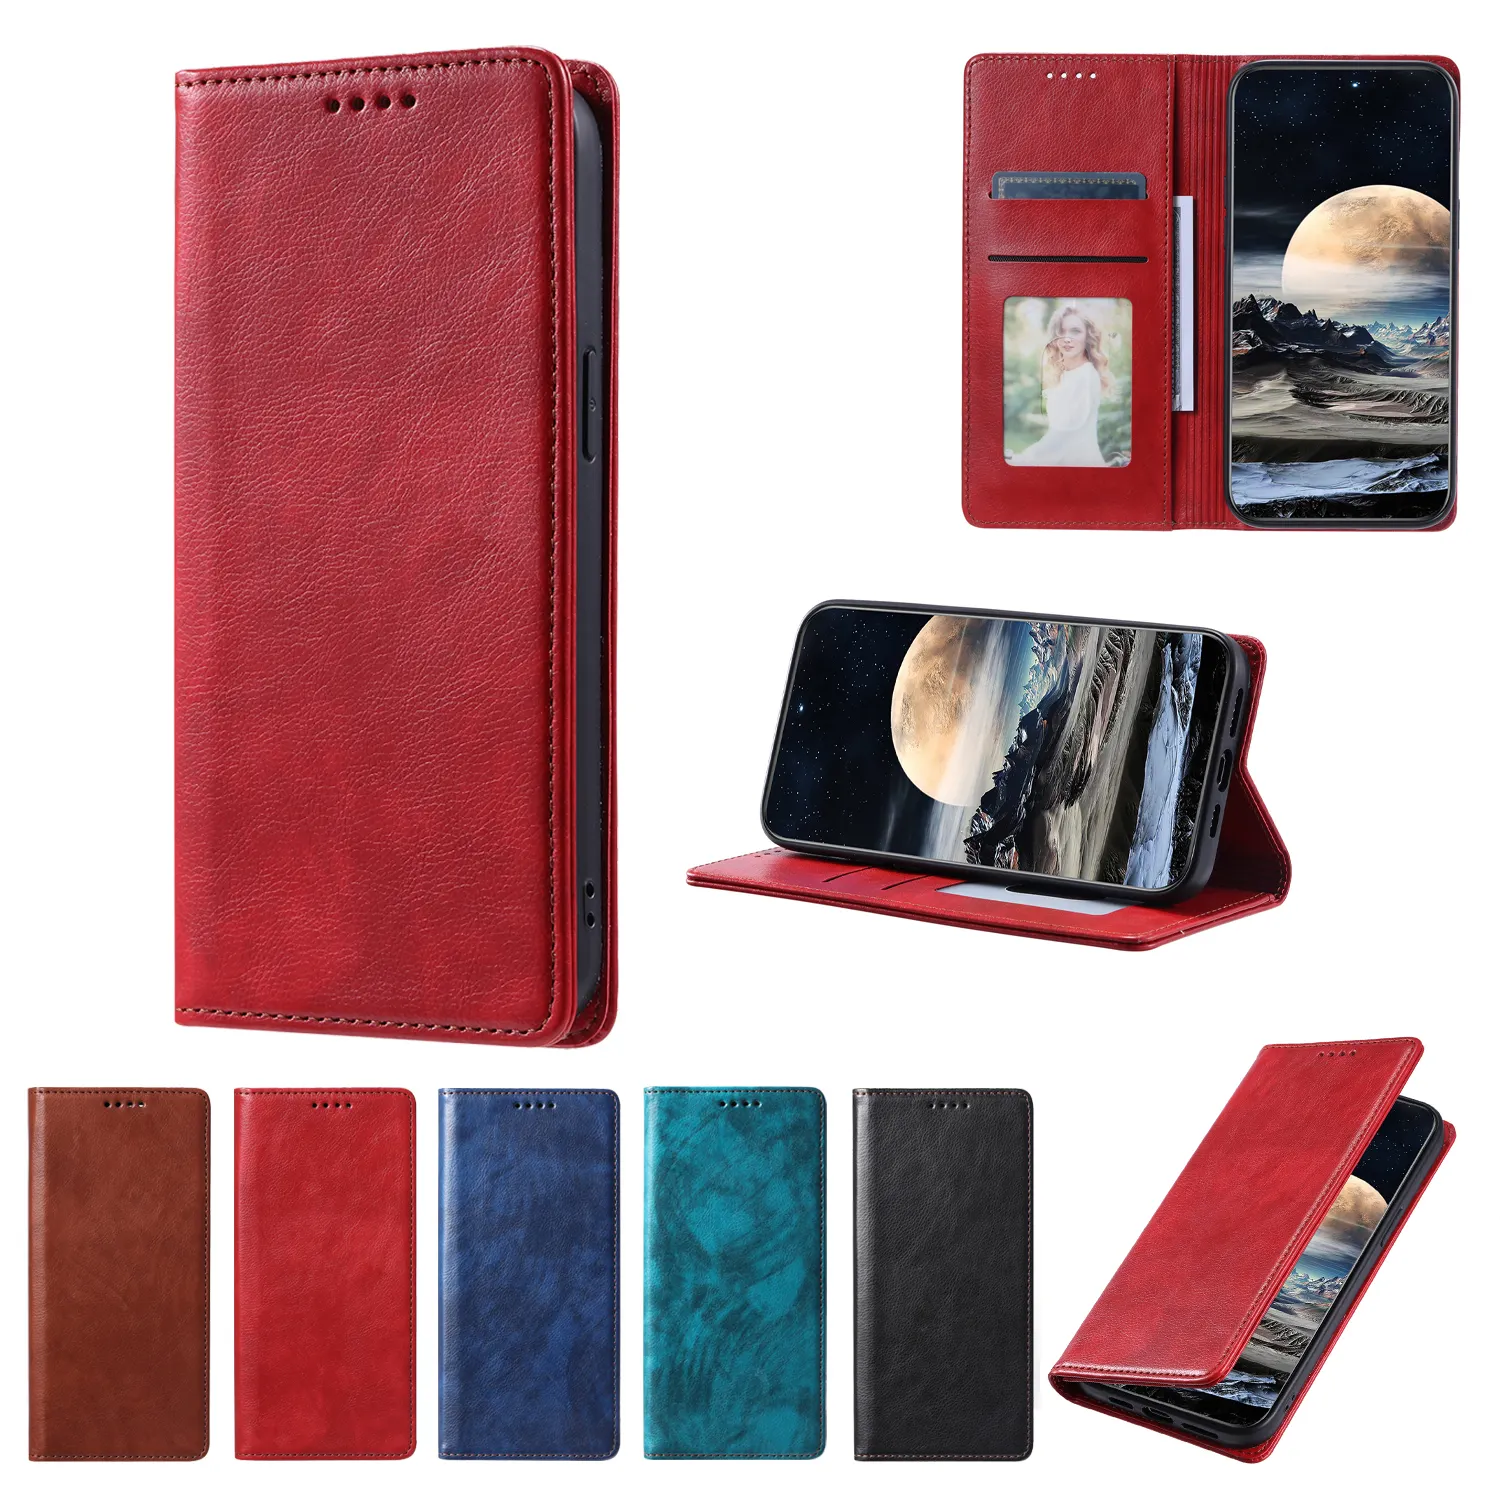 Samsung Galaxy A21s kırmızı Litchi tahıl deri cüzdan cep telefonu kılıf için kart yuvası çanta kapak çevirin